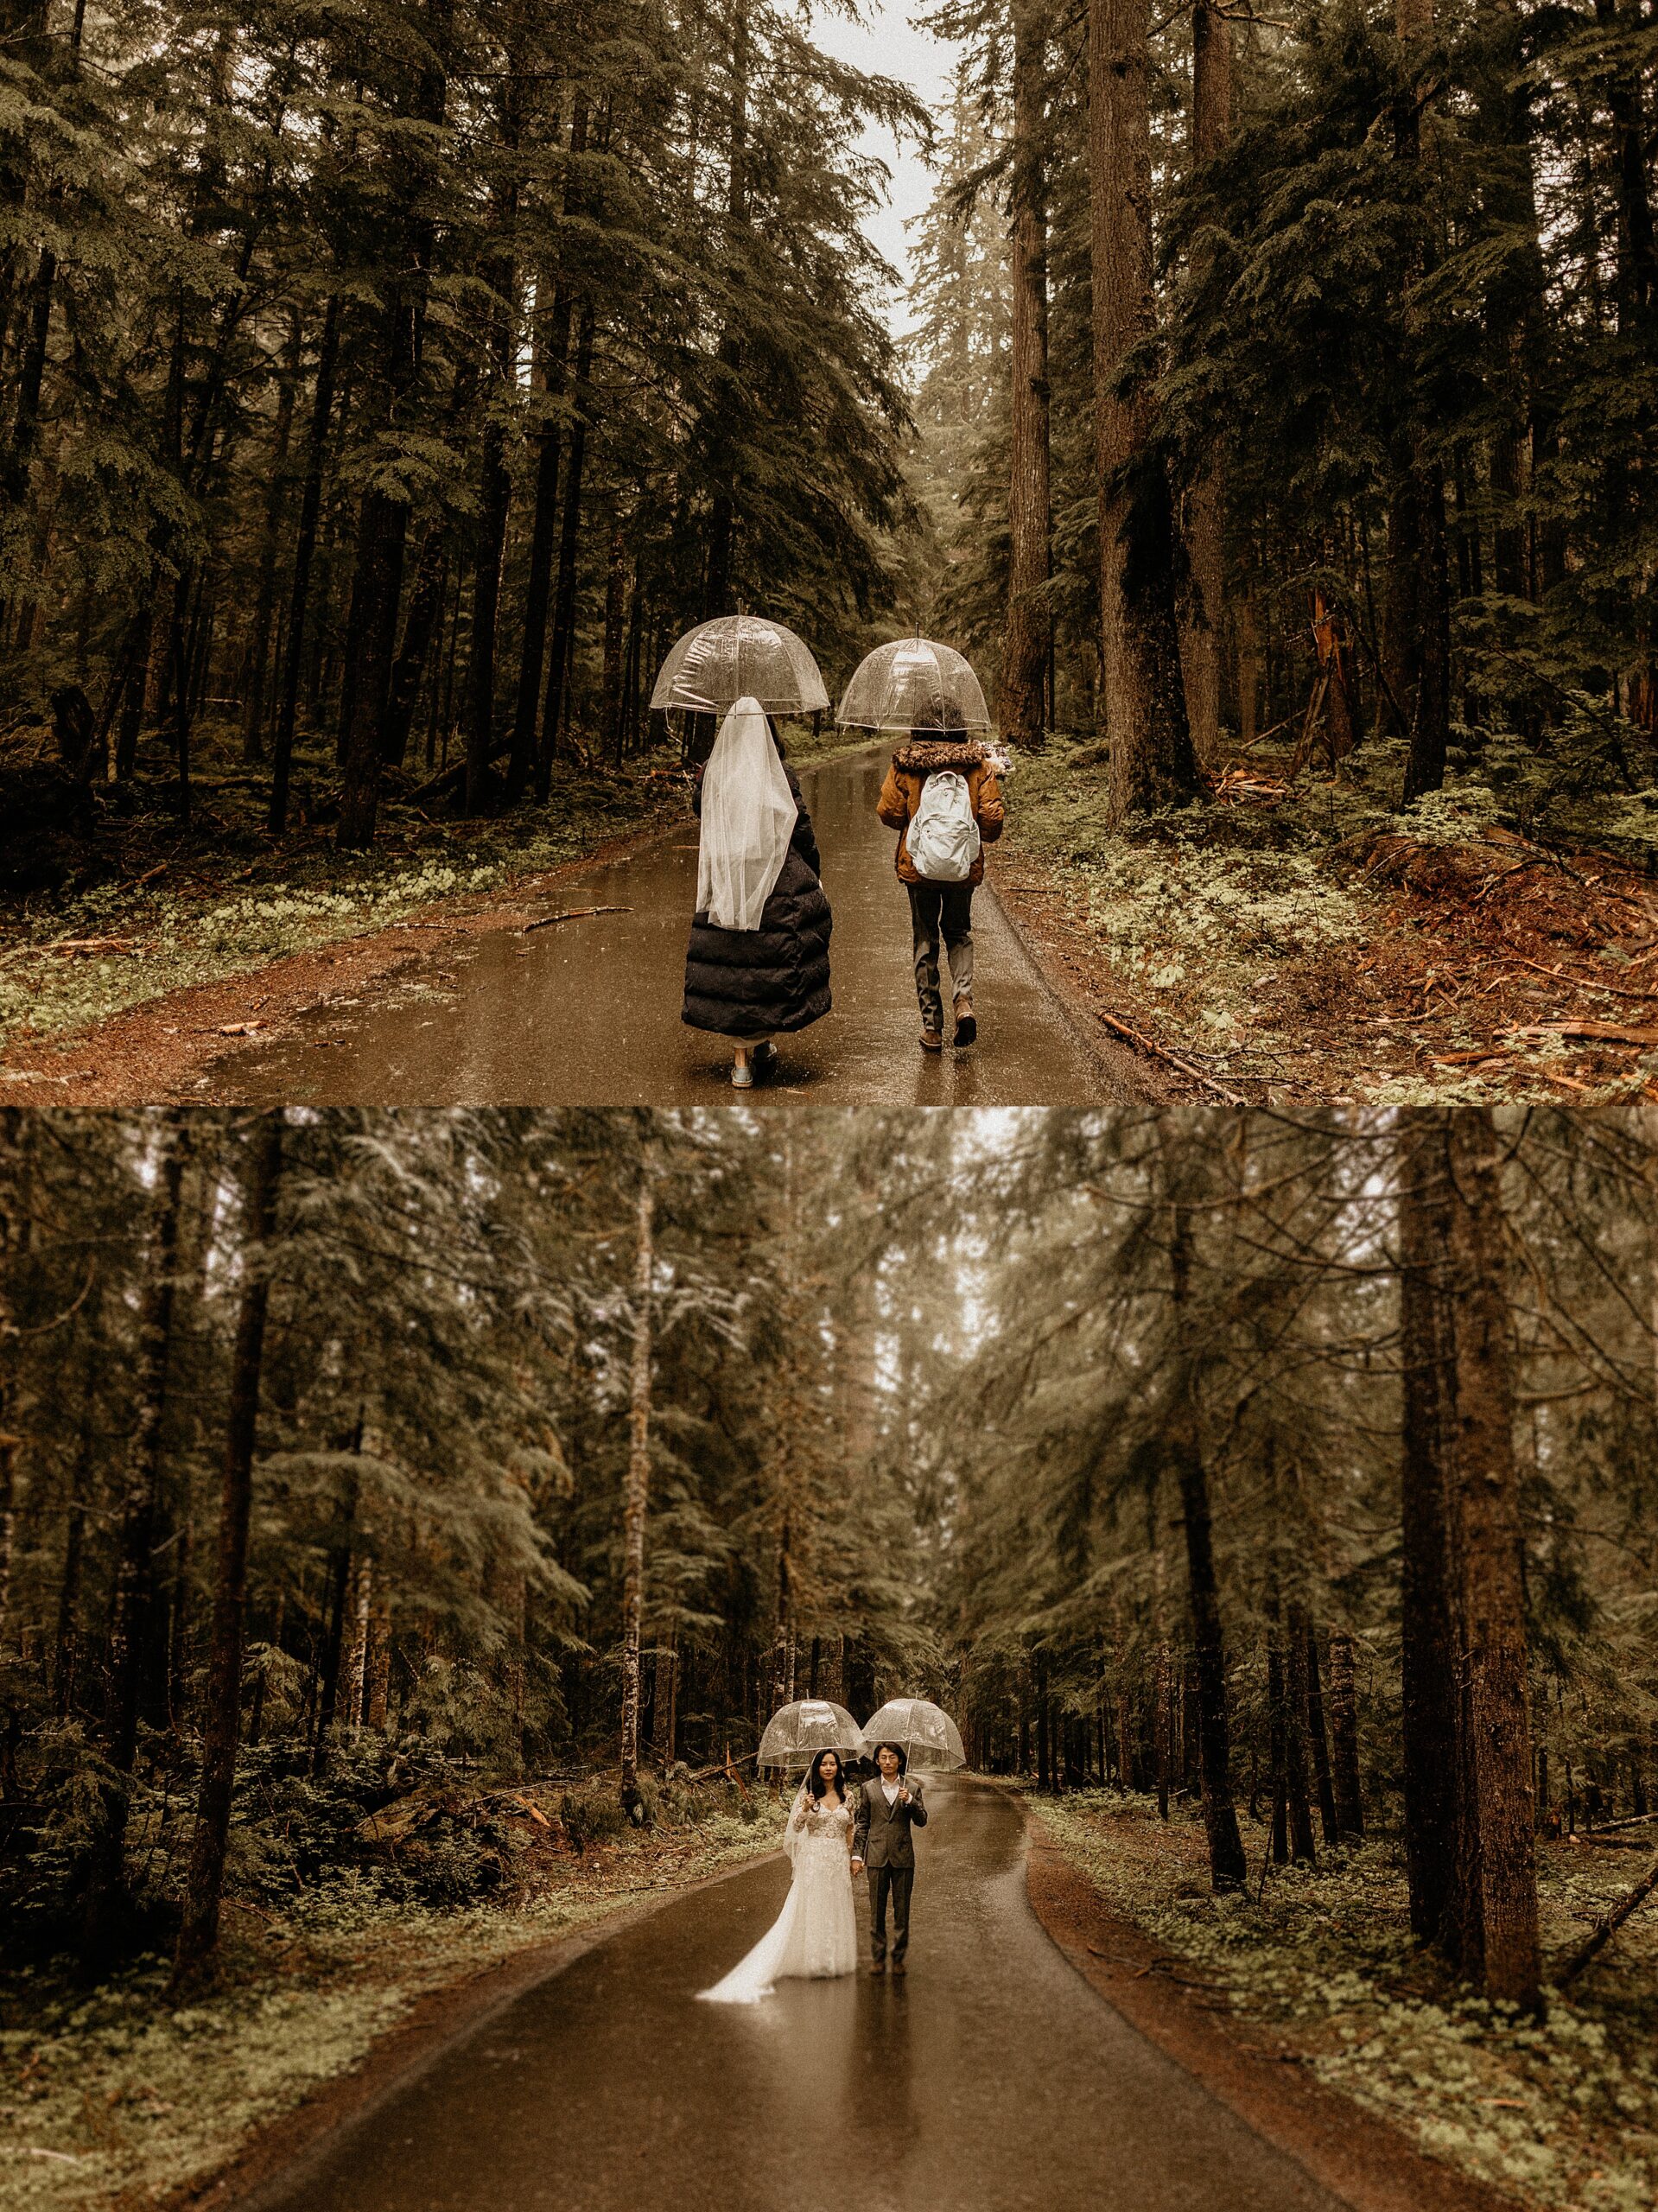 bride and groom walking together with umbrellas forest landscape